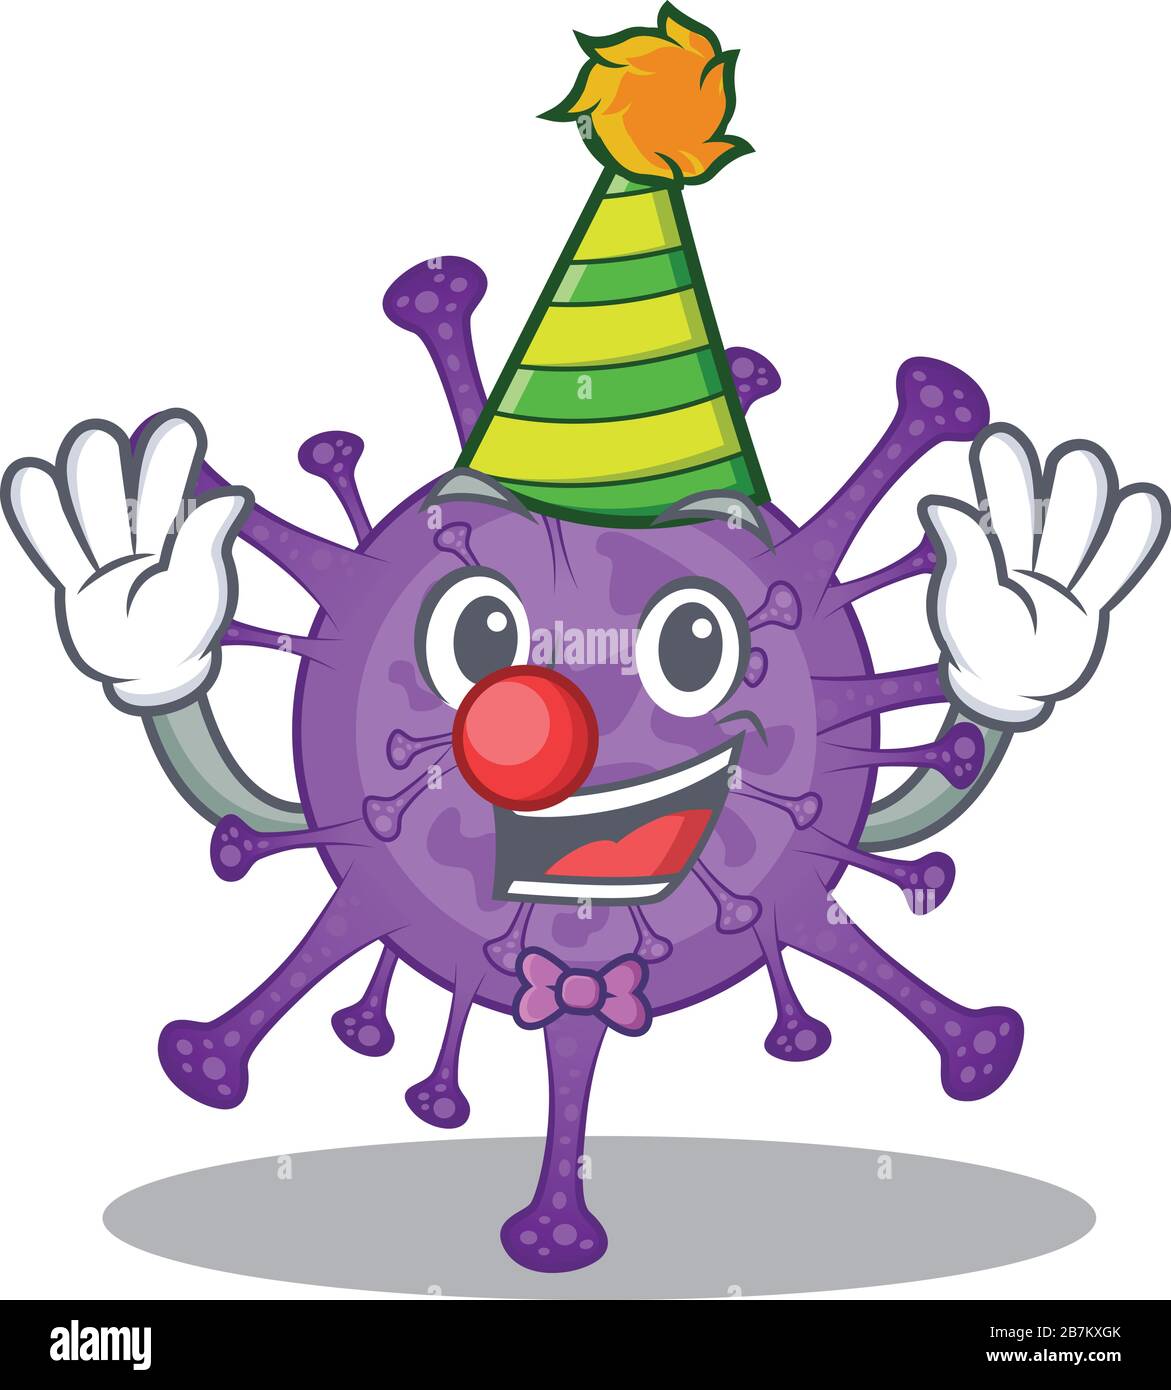 Cute And Funny Clown Bovine Coronavirus Cartoon Character Mascot